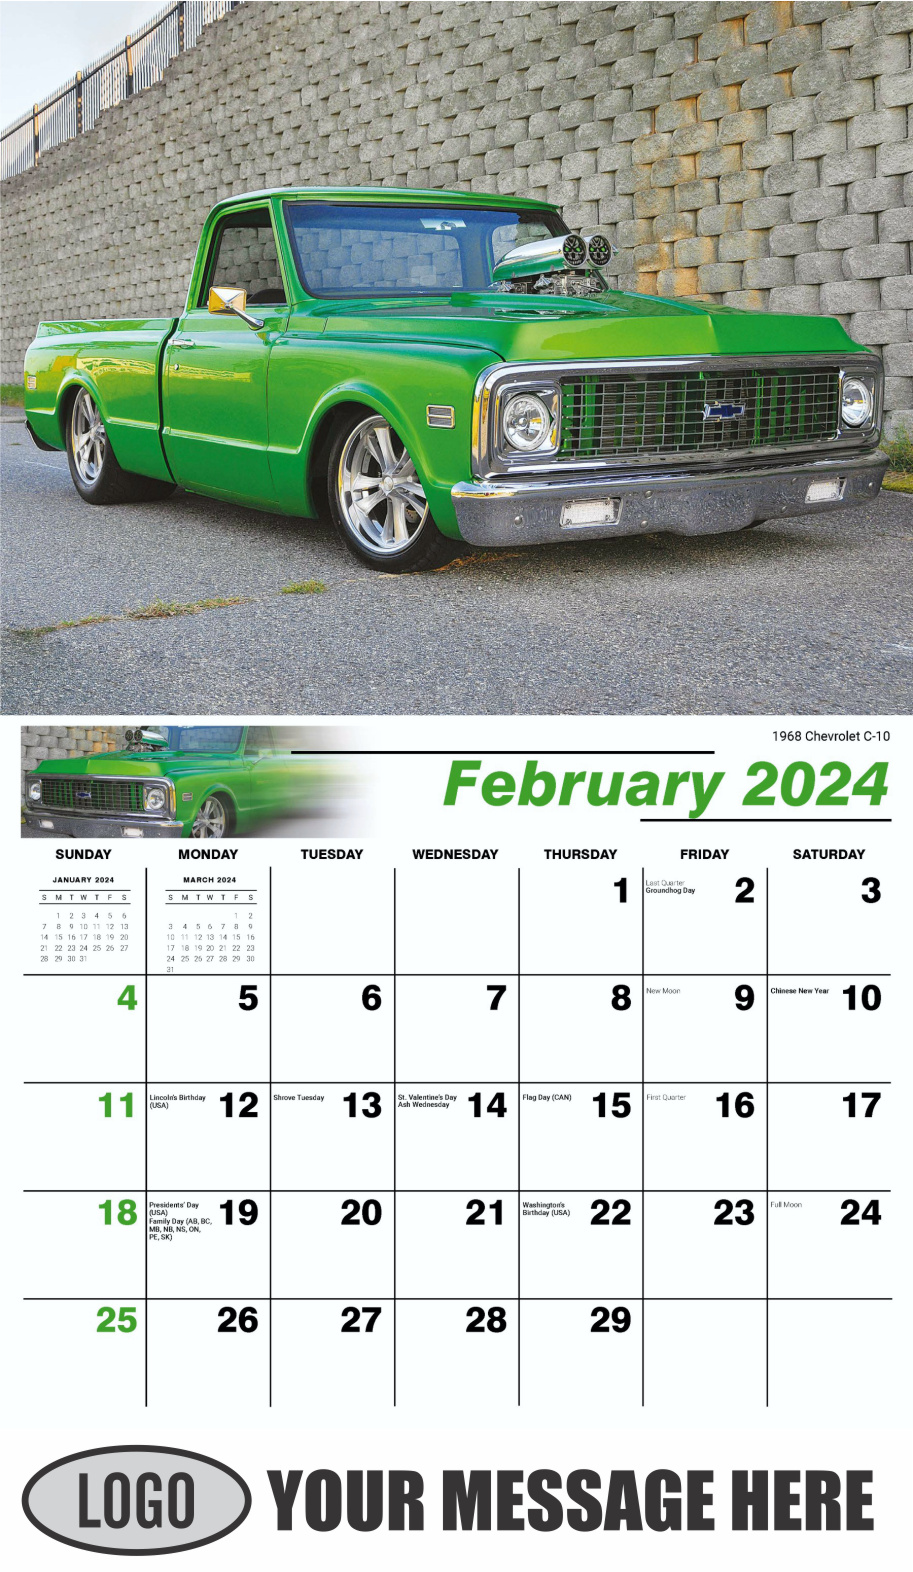 Pumped-Up Pickups 2024 Automotive Business Promo Calendar - February